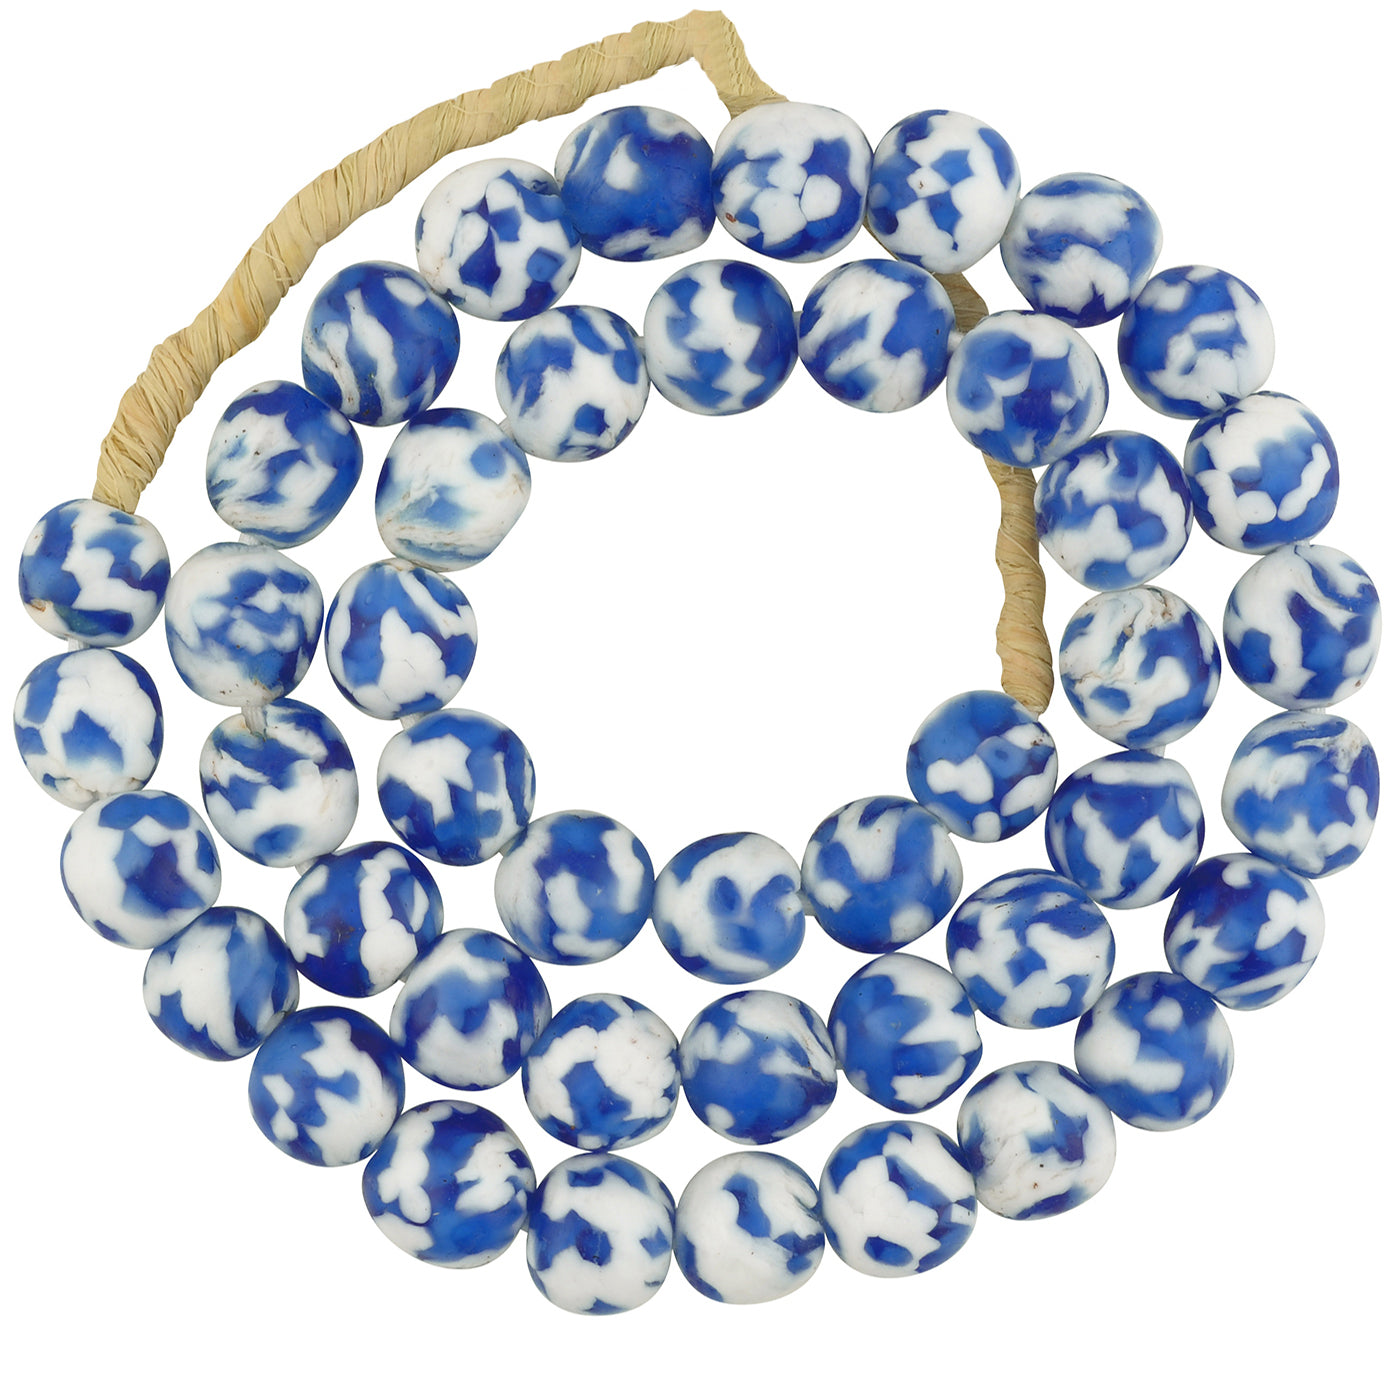 Krobo recycled glass seed beads handmade Ghana necklace African